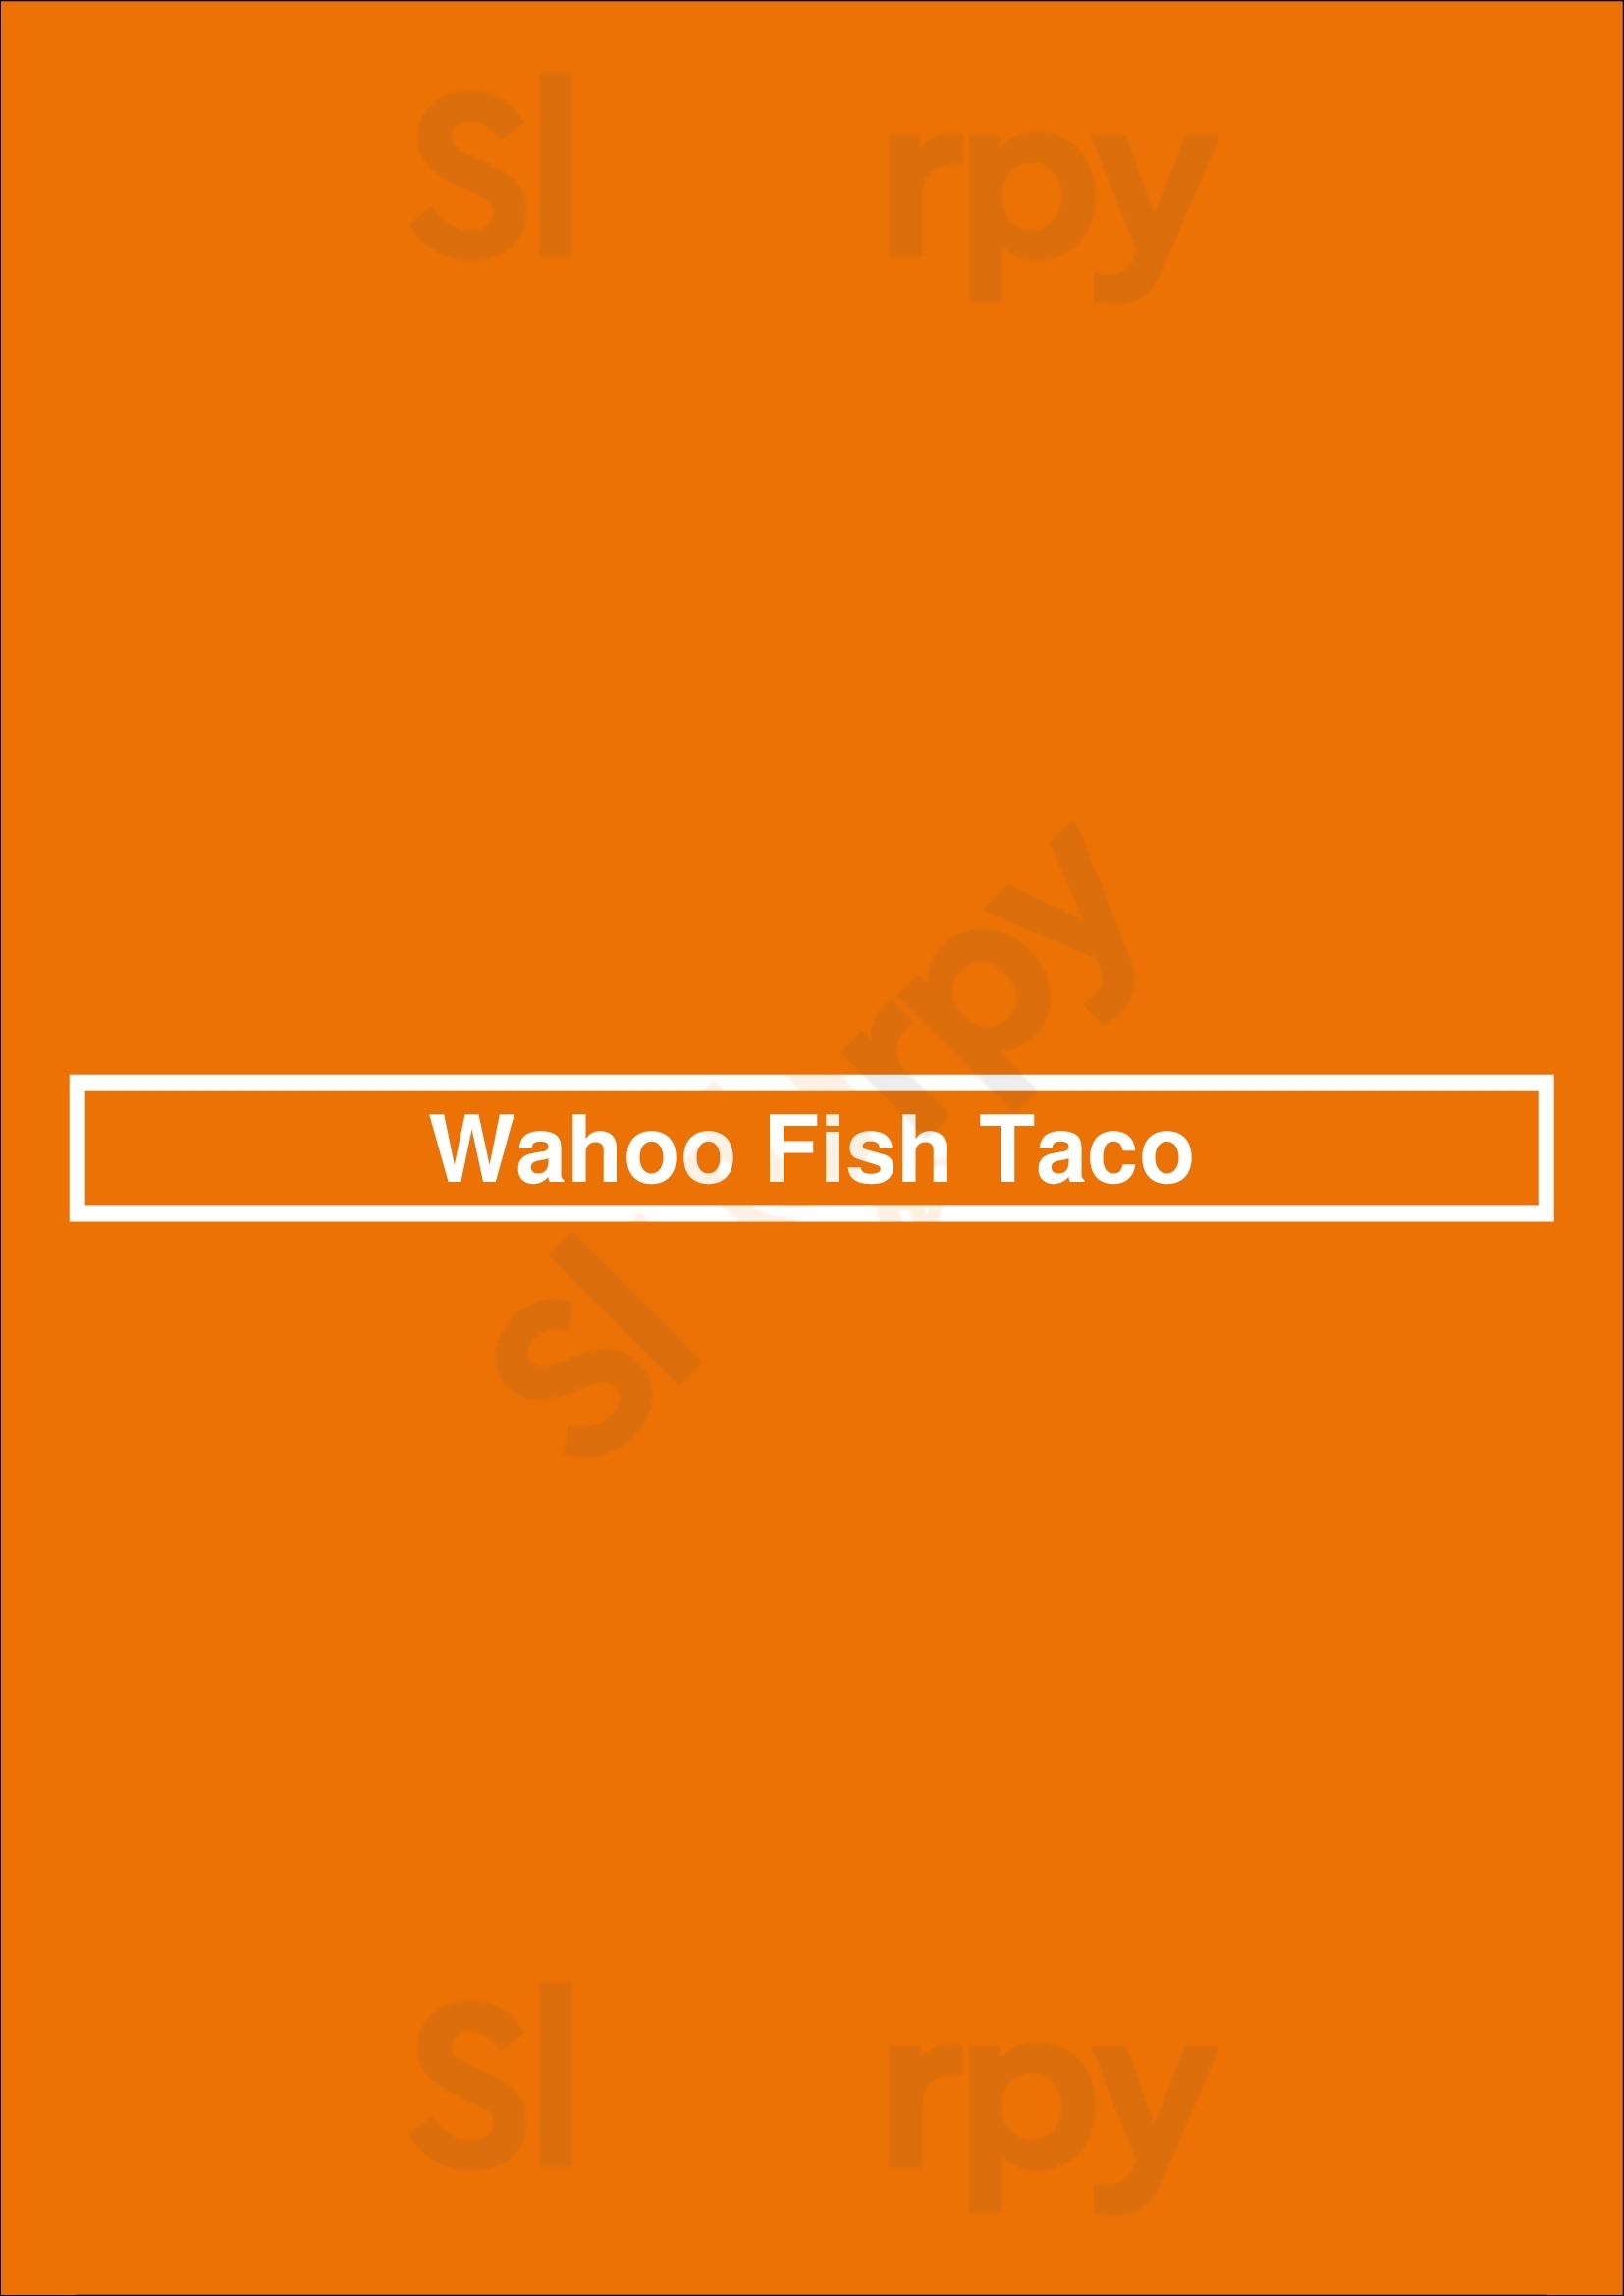 Wahoo Fish Taco Fullerton Menu - 1